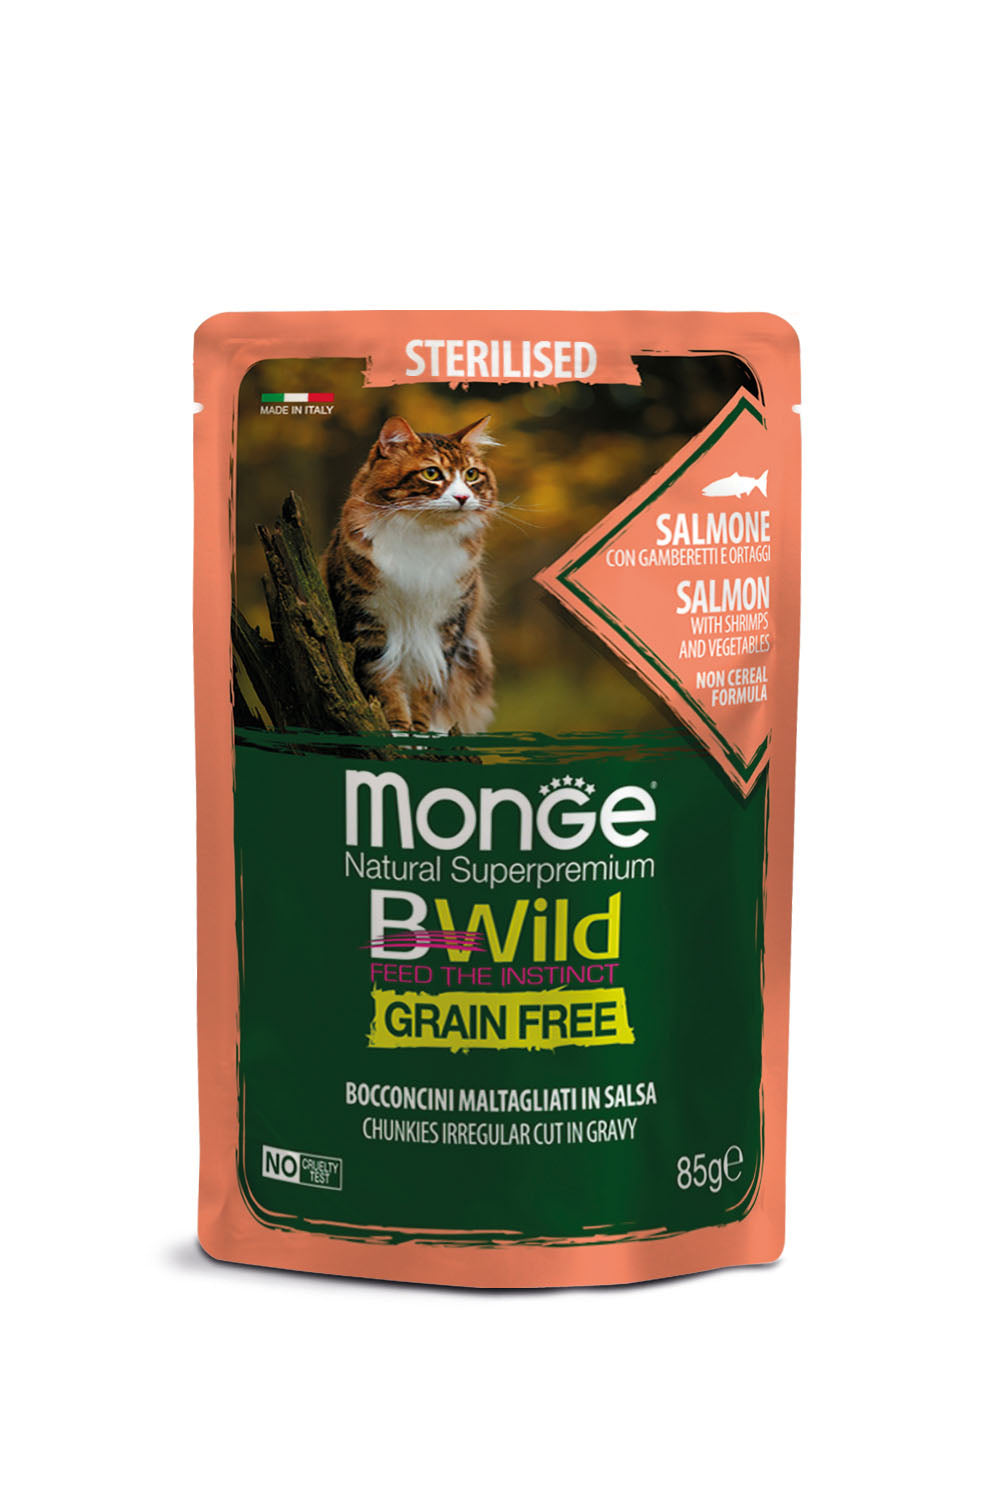 Monge Cat - Bwild - GRAIN FREE - Sterilised Salmon